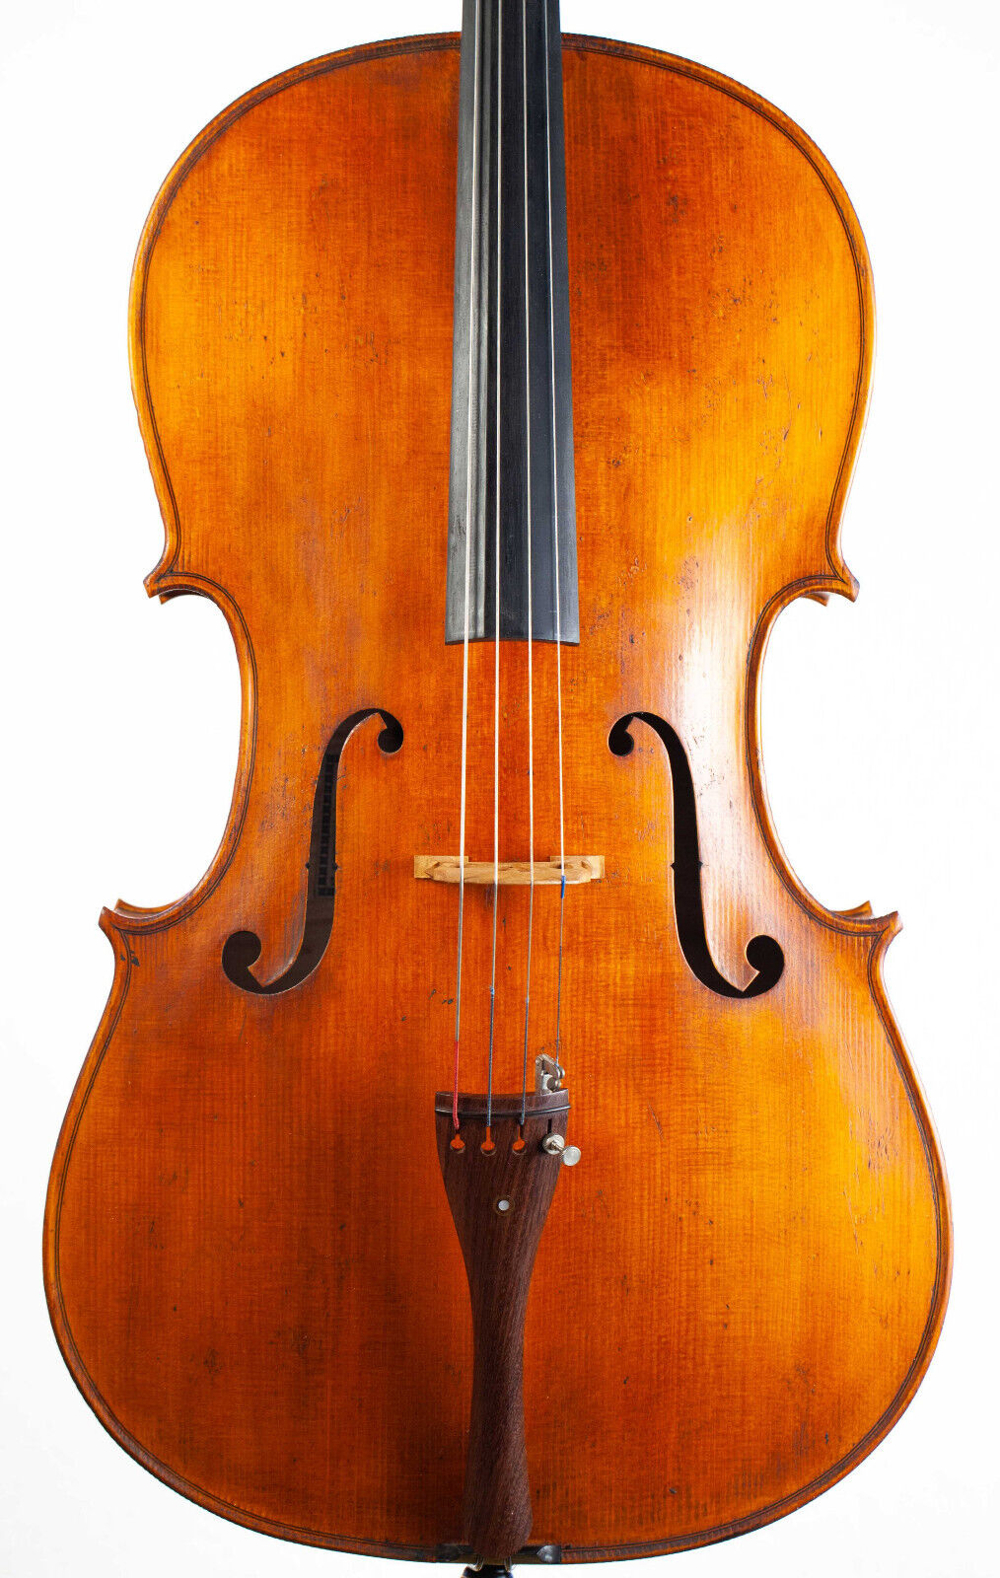 Altes cello violoncello violoncelle Ventapane